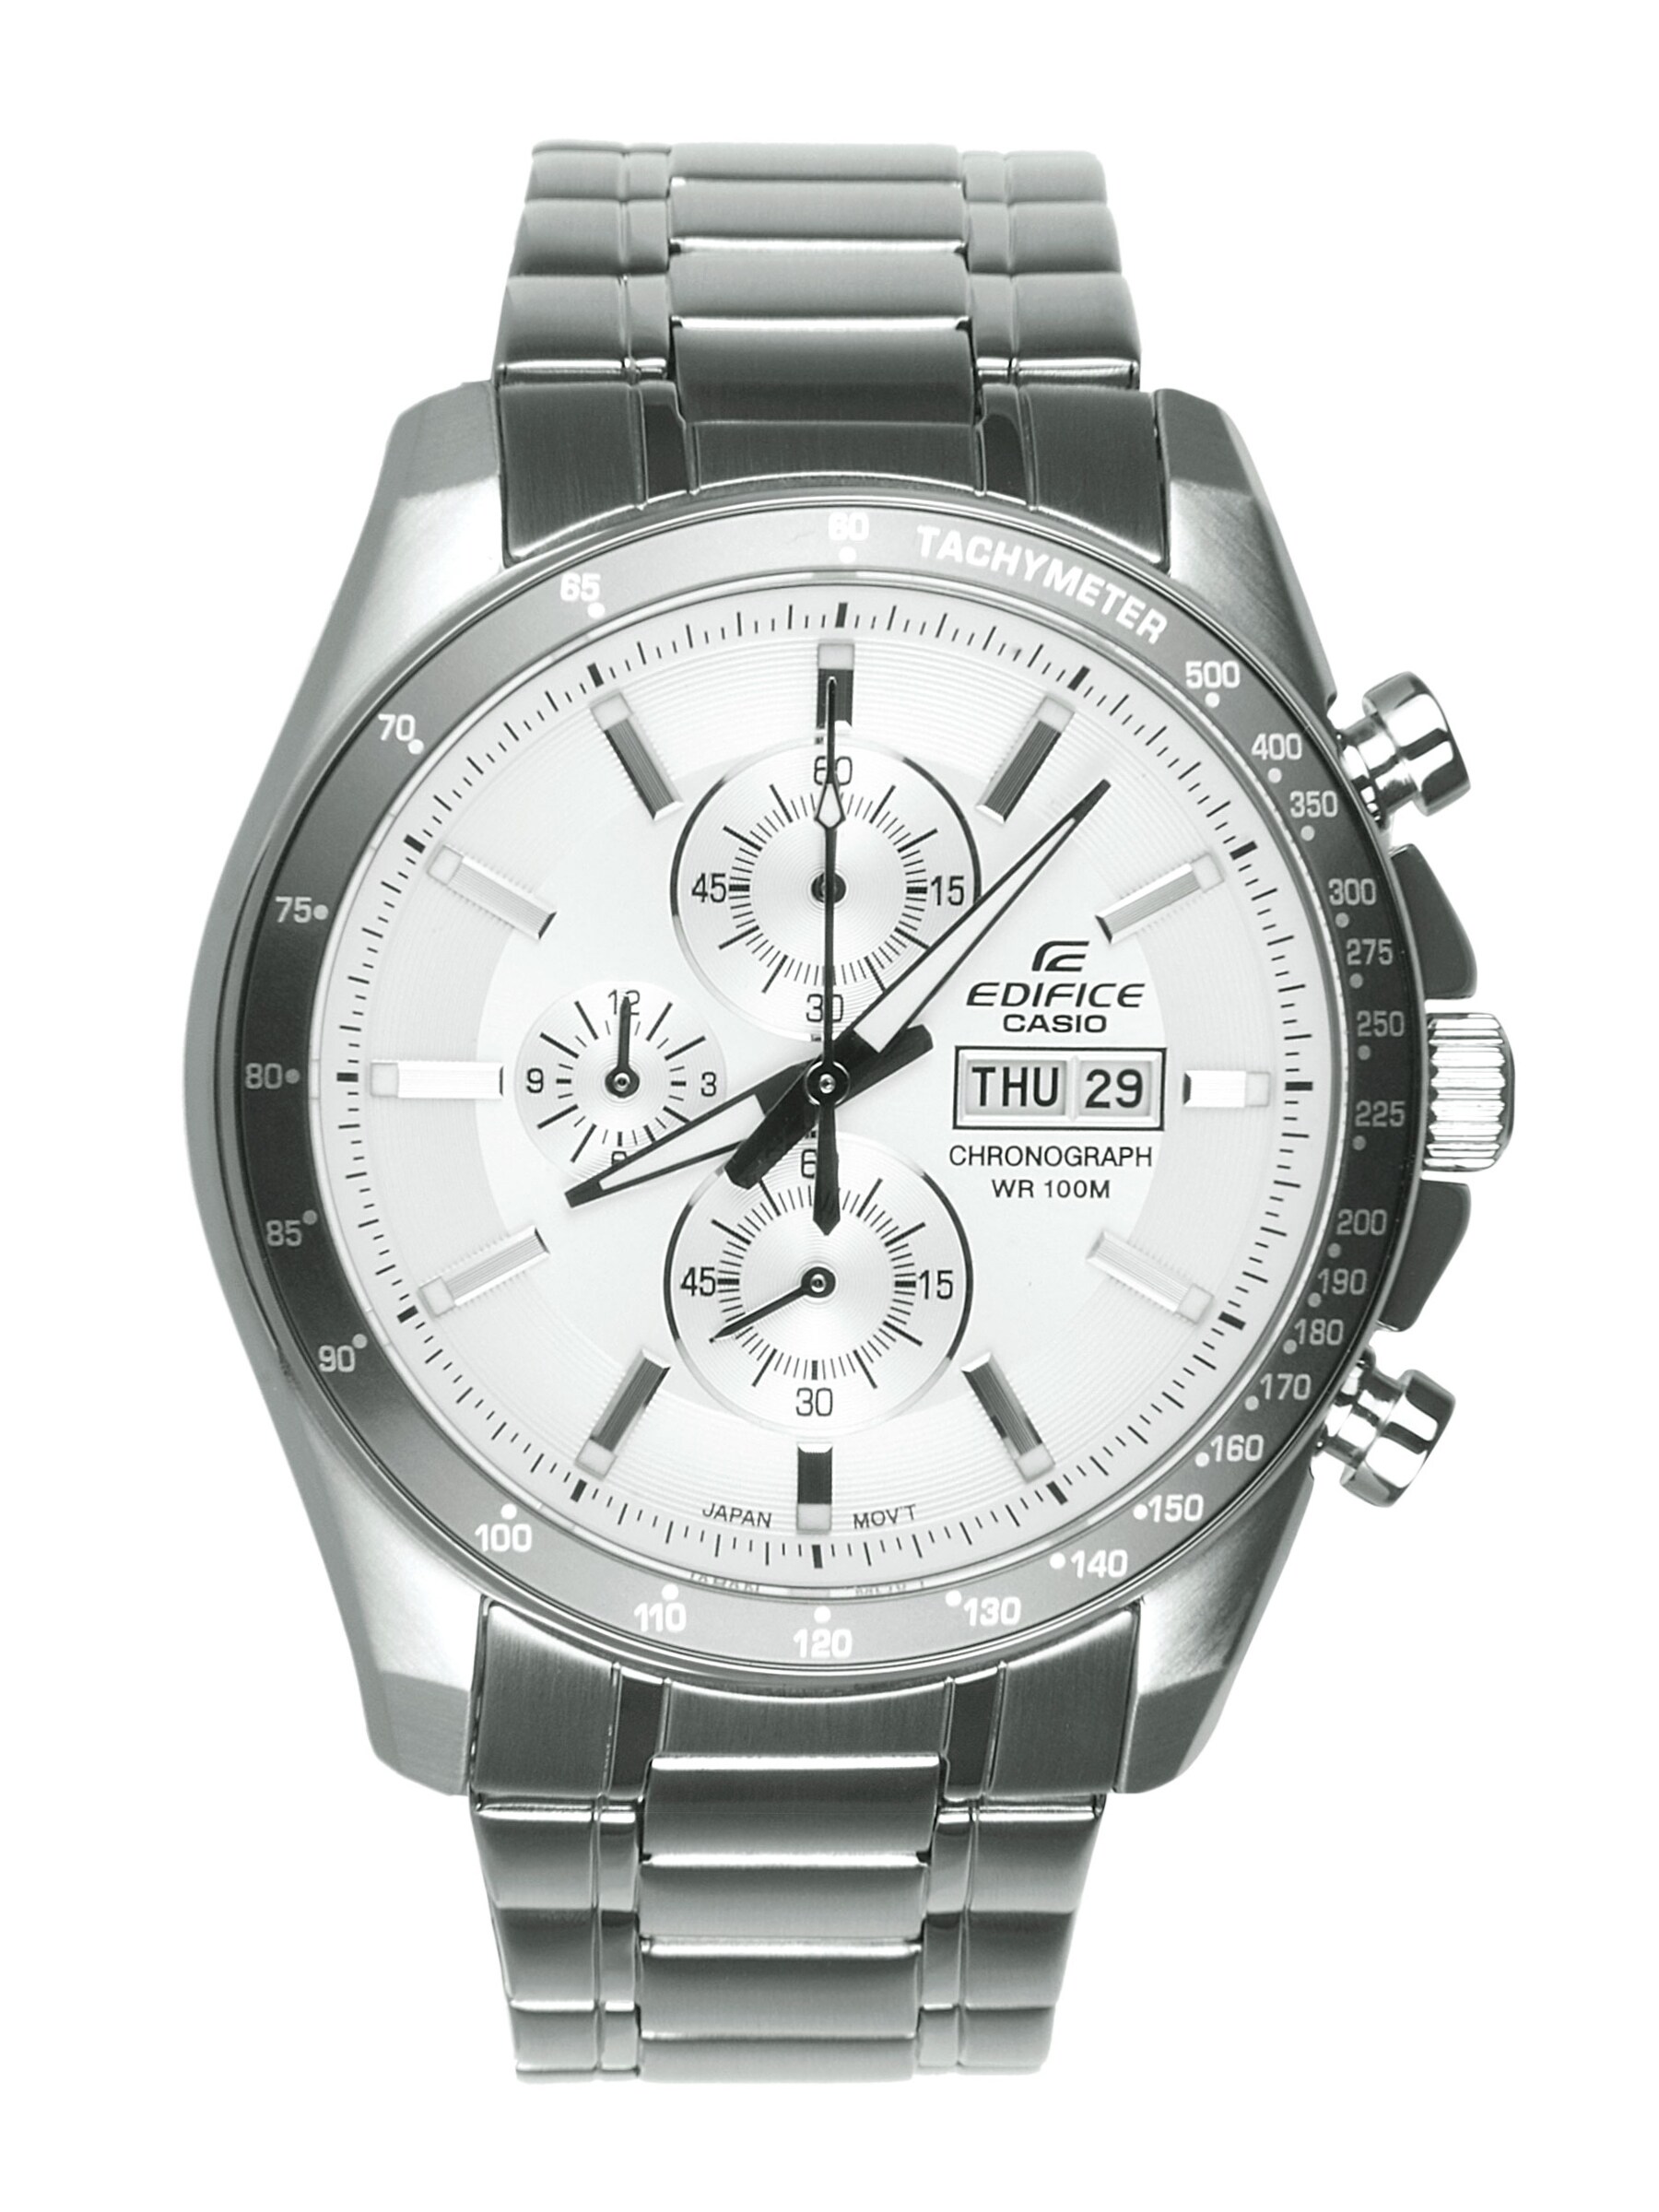 Casio Men Steel Watch EX045 EFR-502D-7AVDF